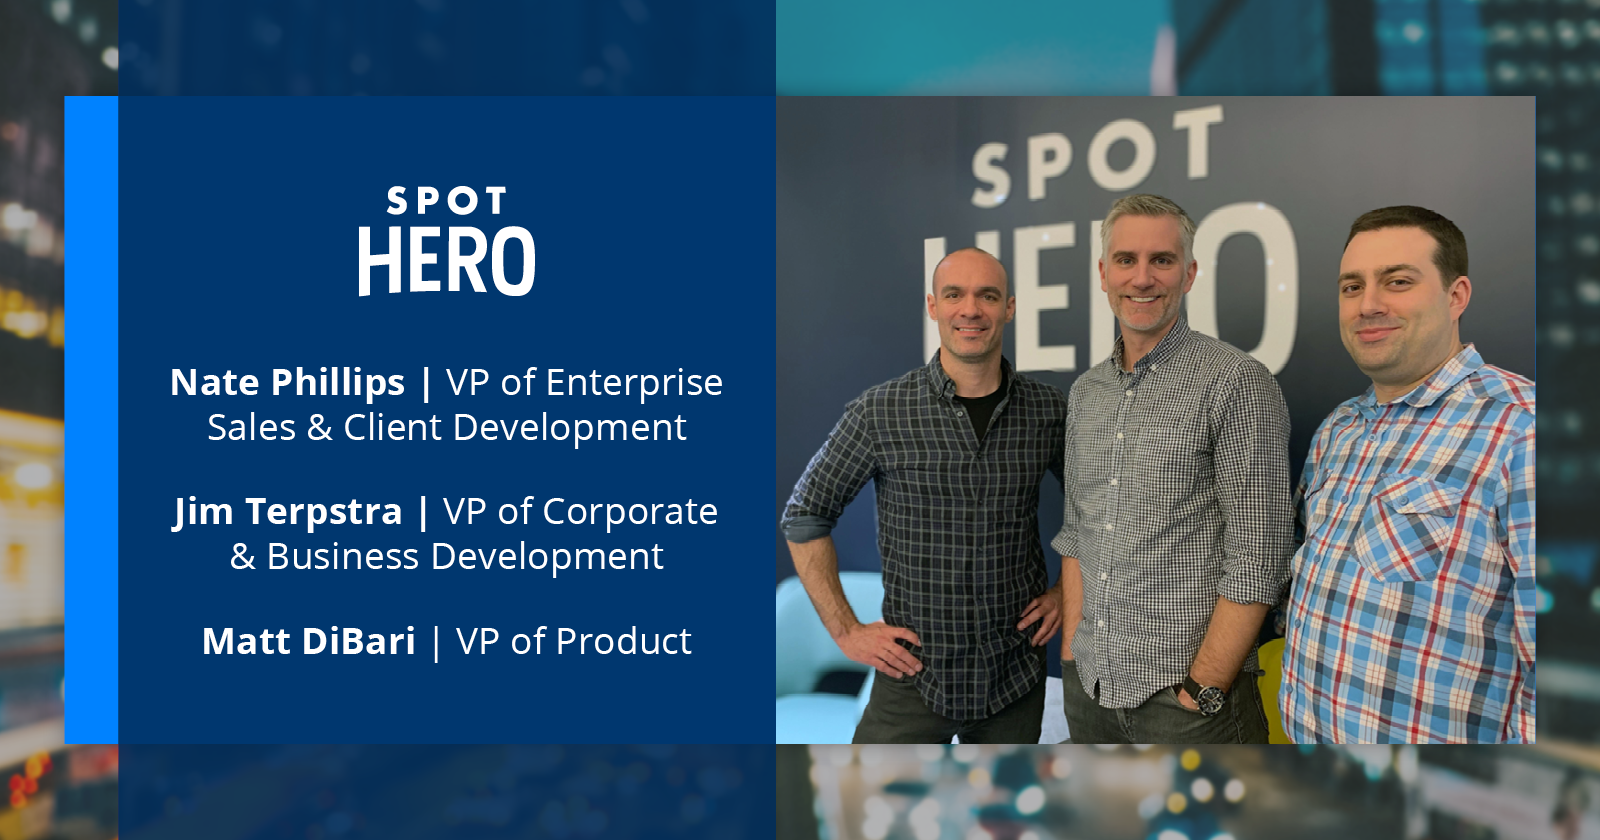 SpotHero Announces Five Executive Leadership Additions